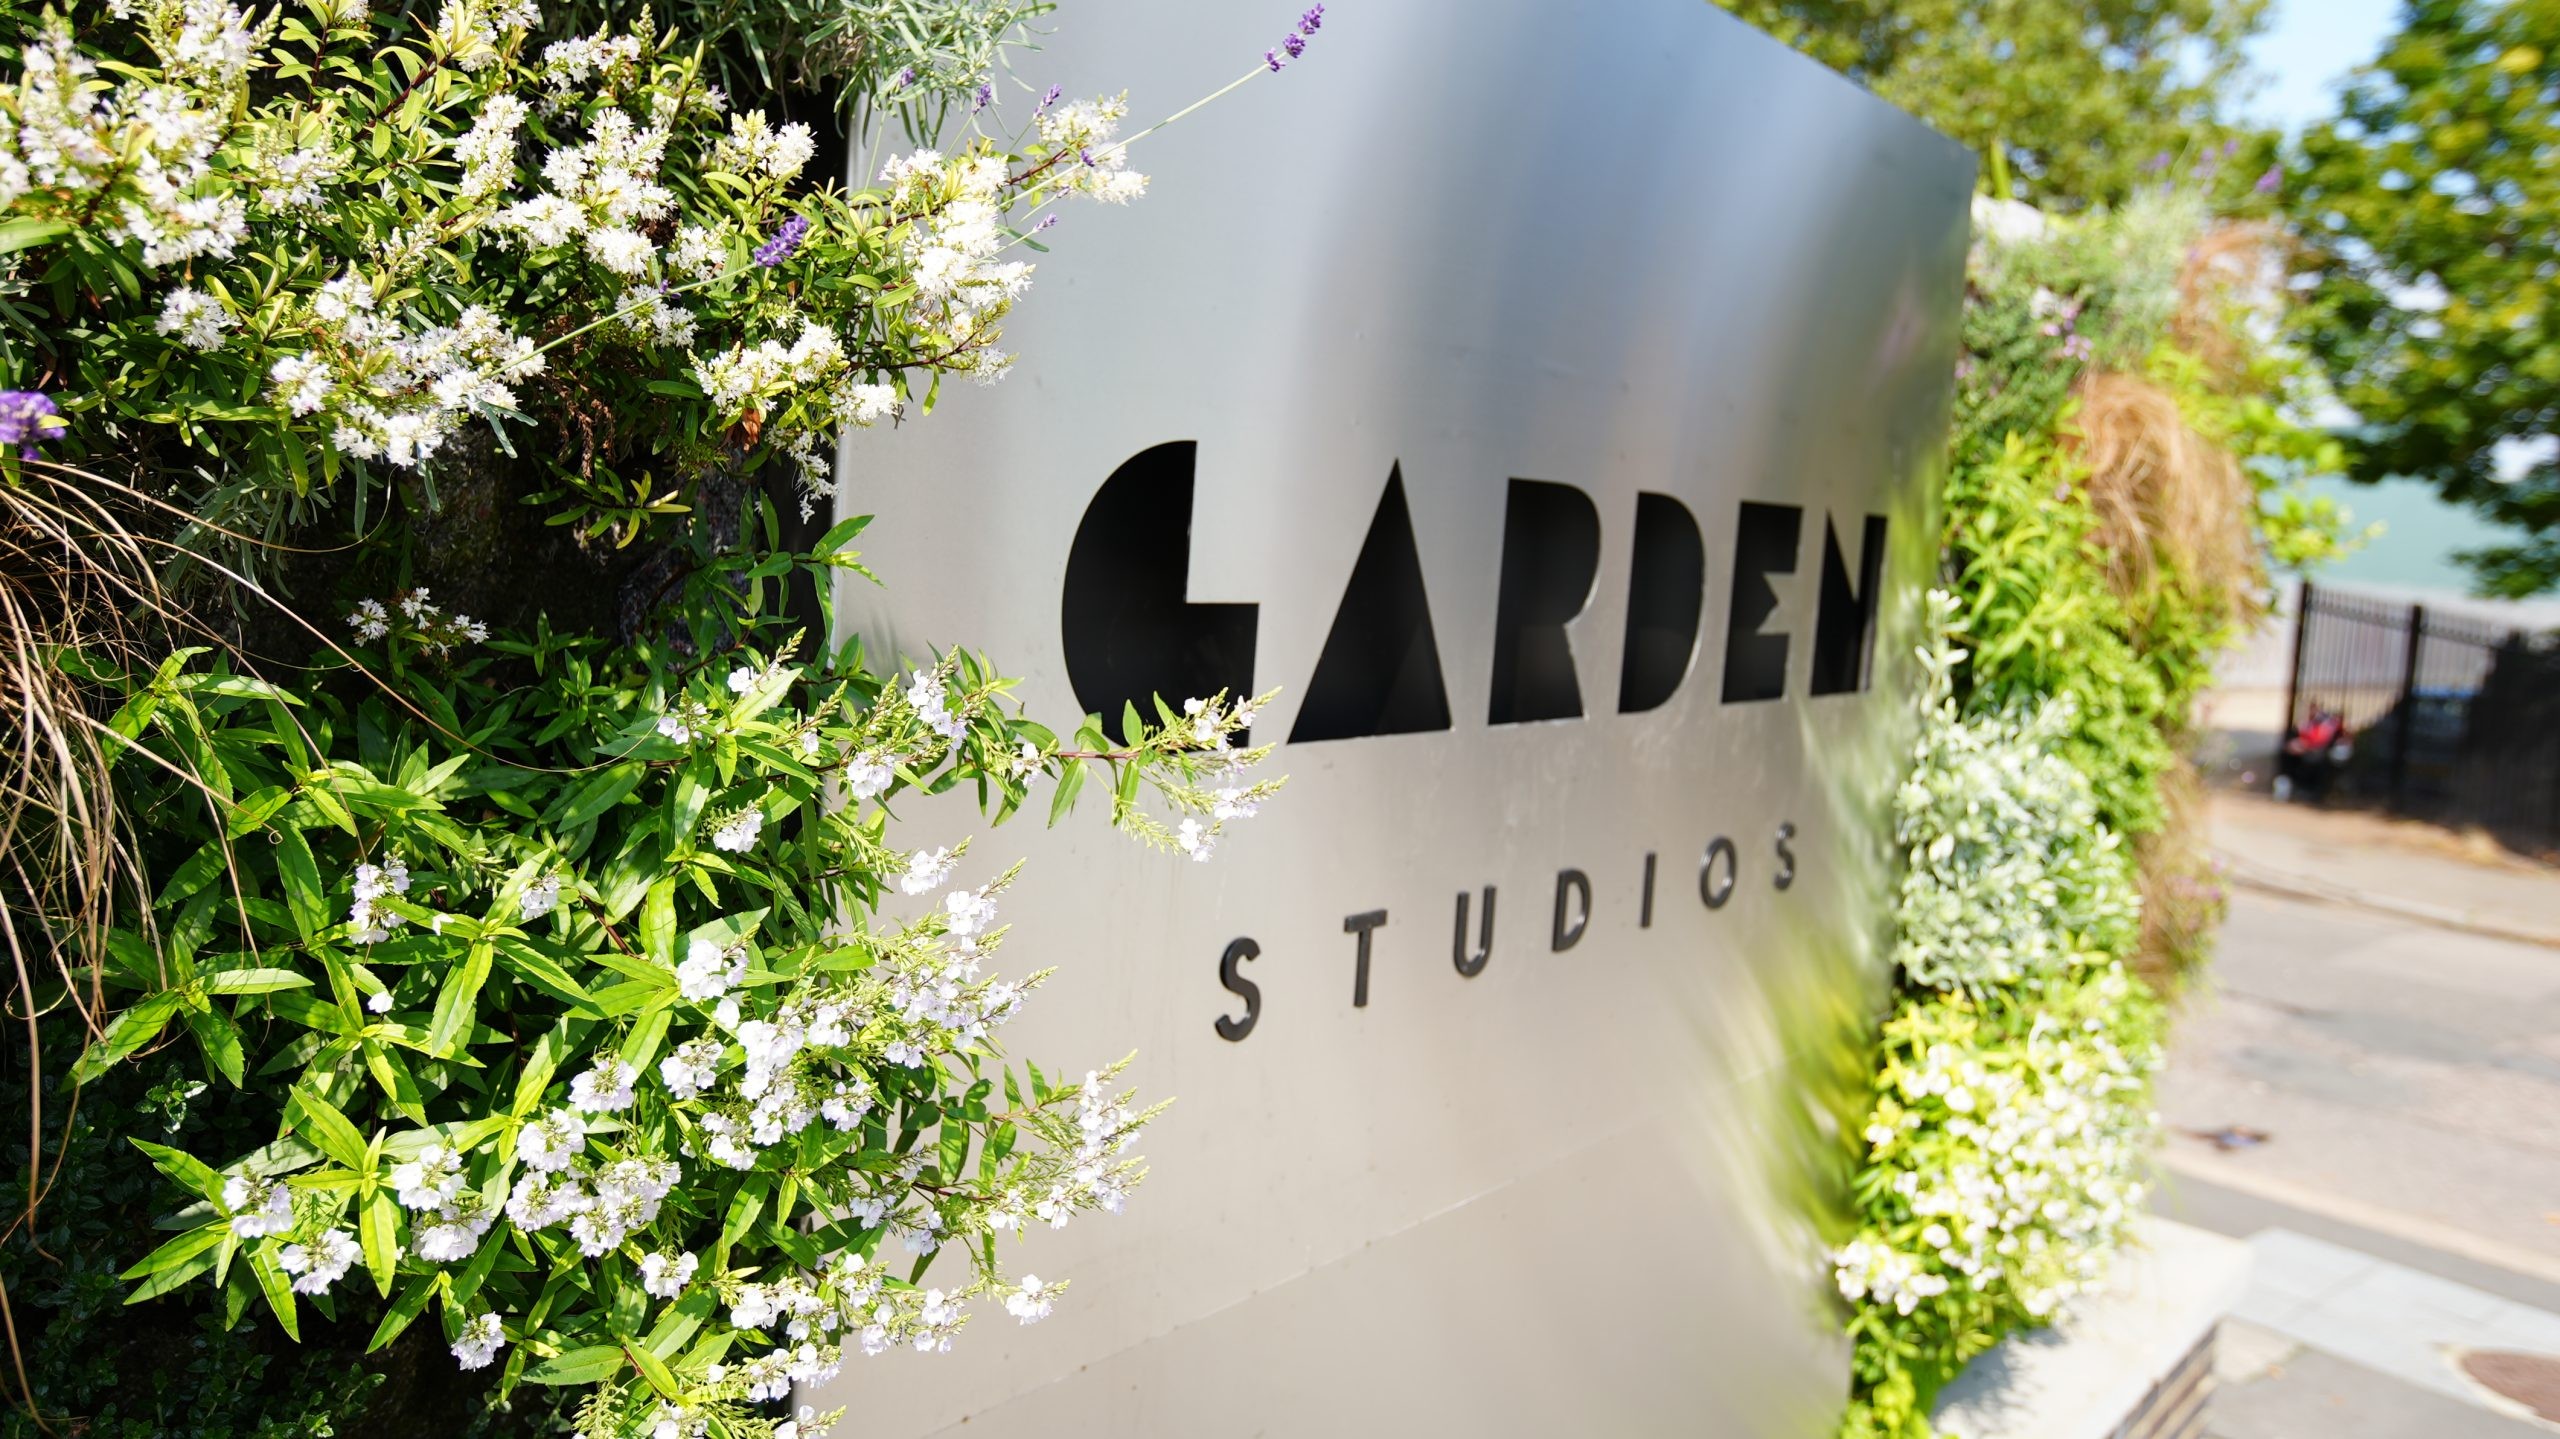 Location Transport Garden-Studios-London Home  